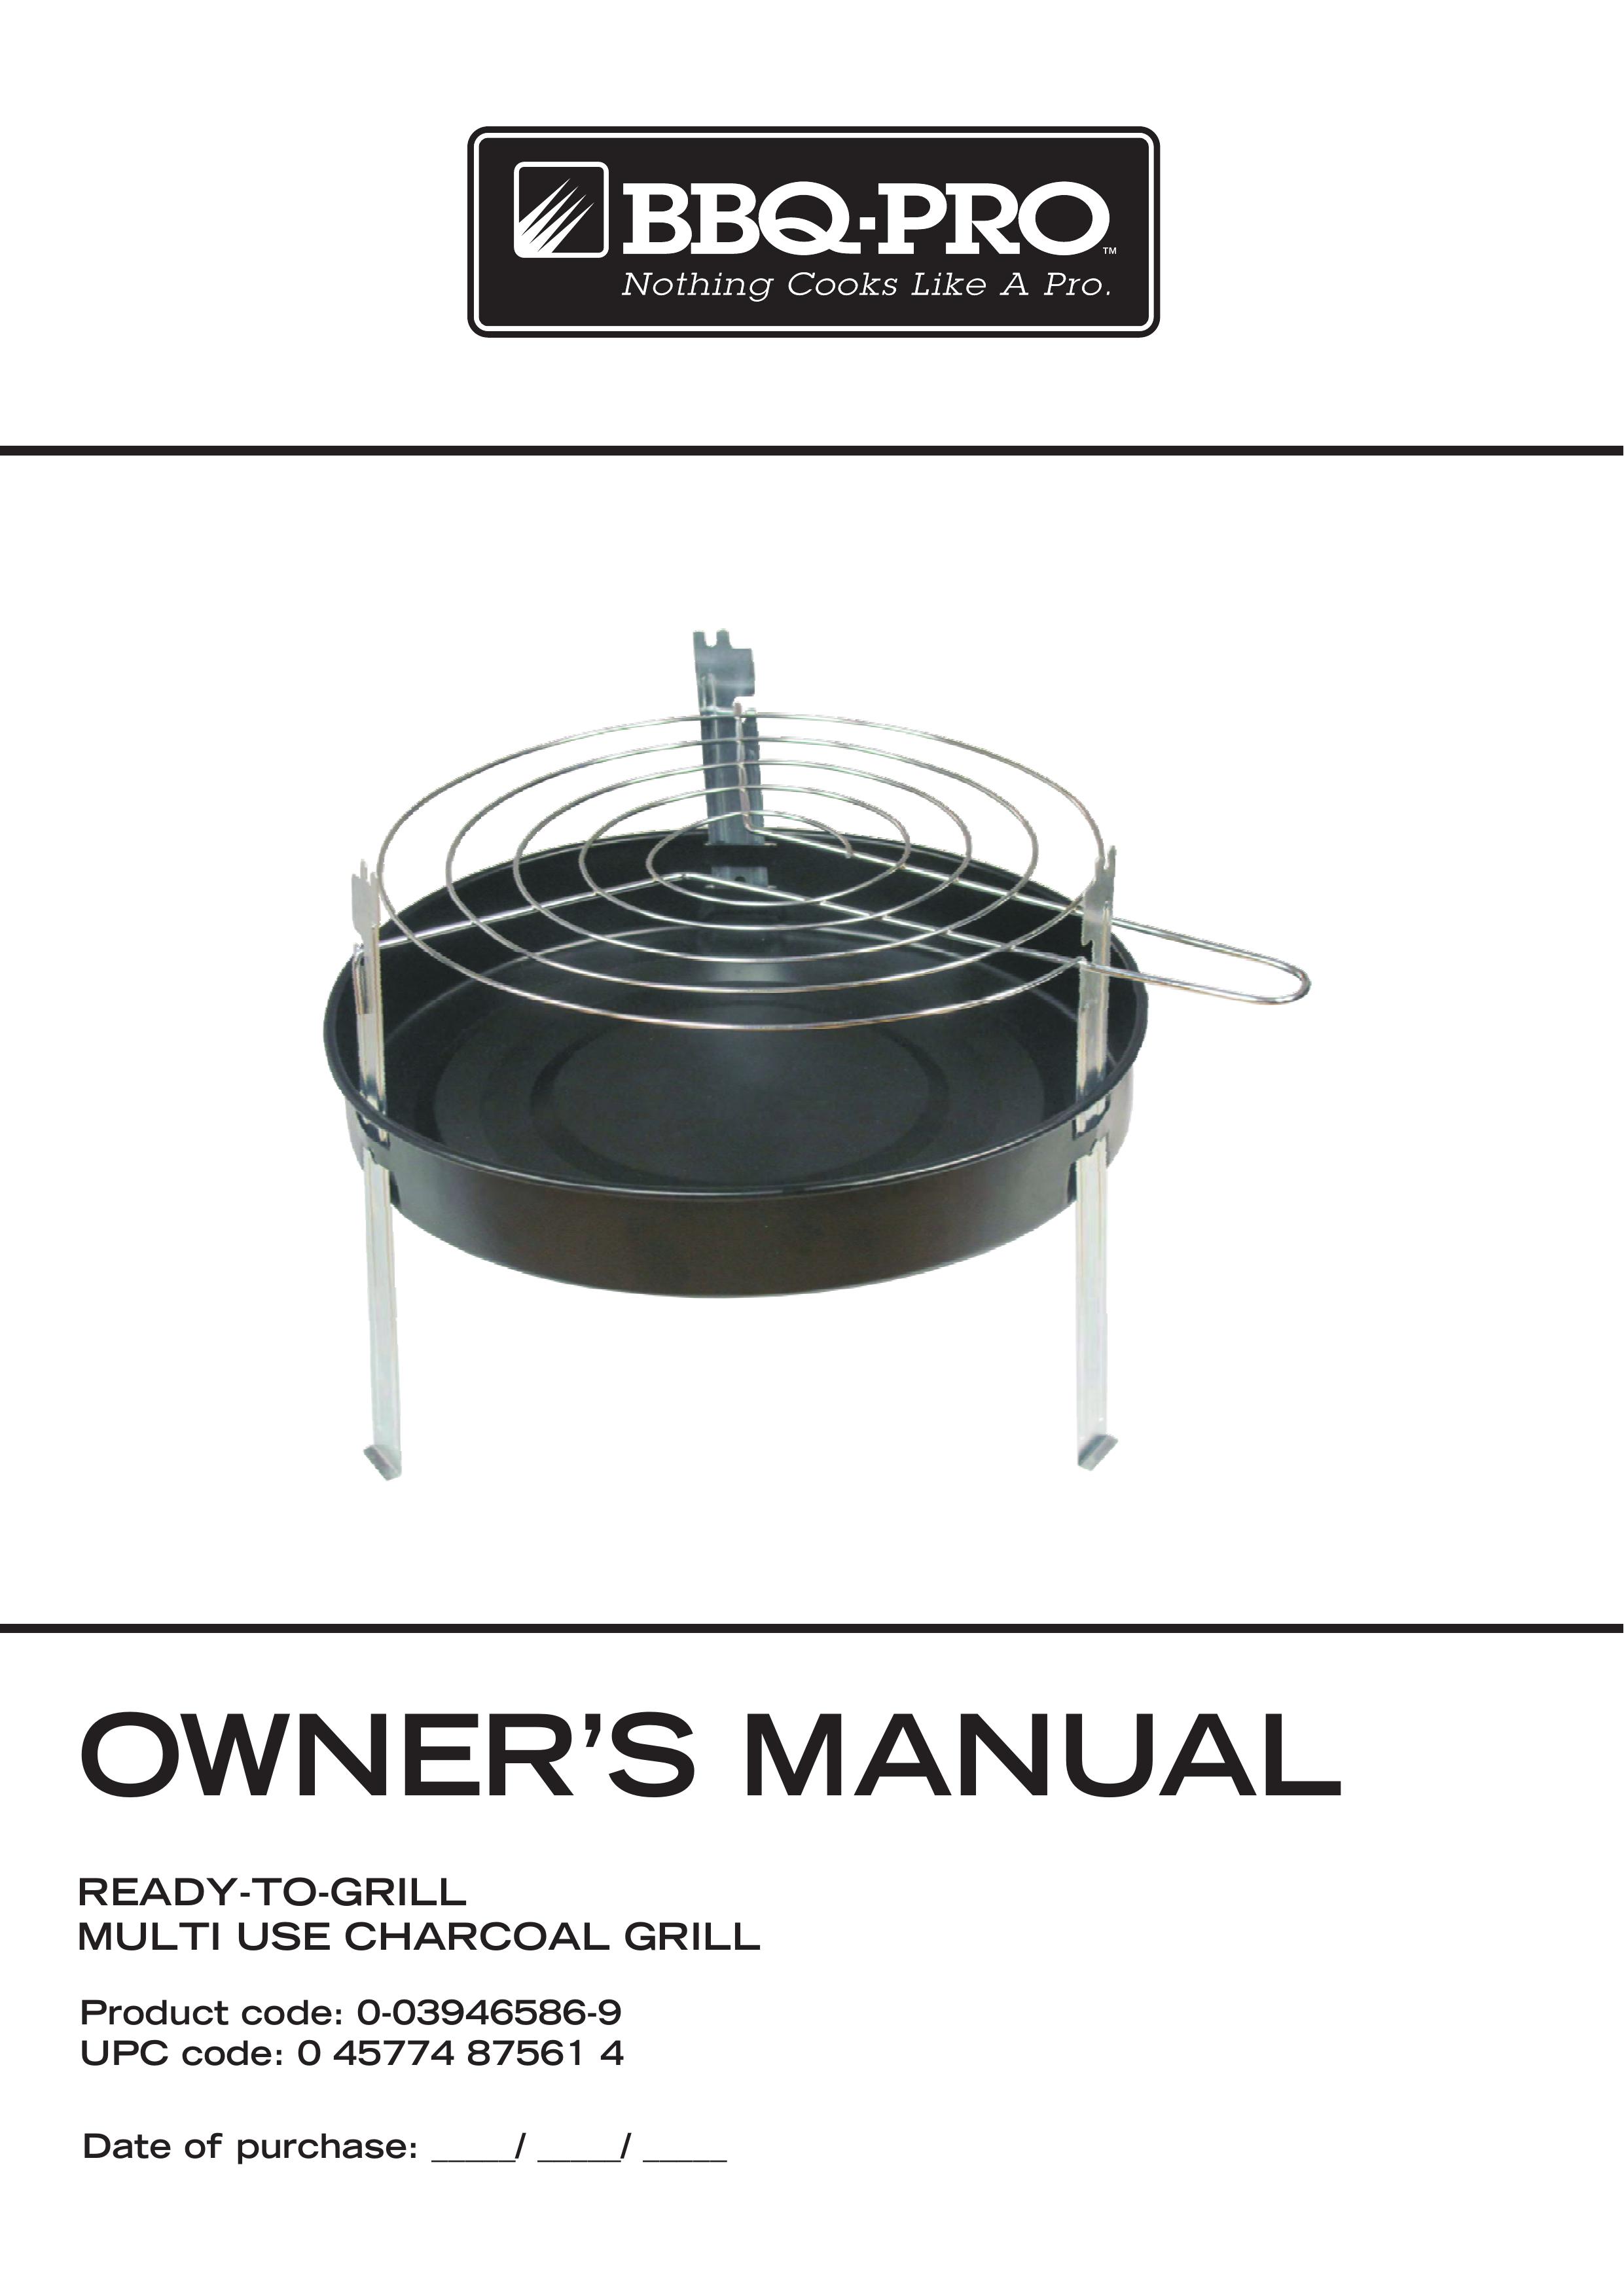 BBQ Pro 0-03946586-9 Charcoal Grill User Manual